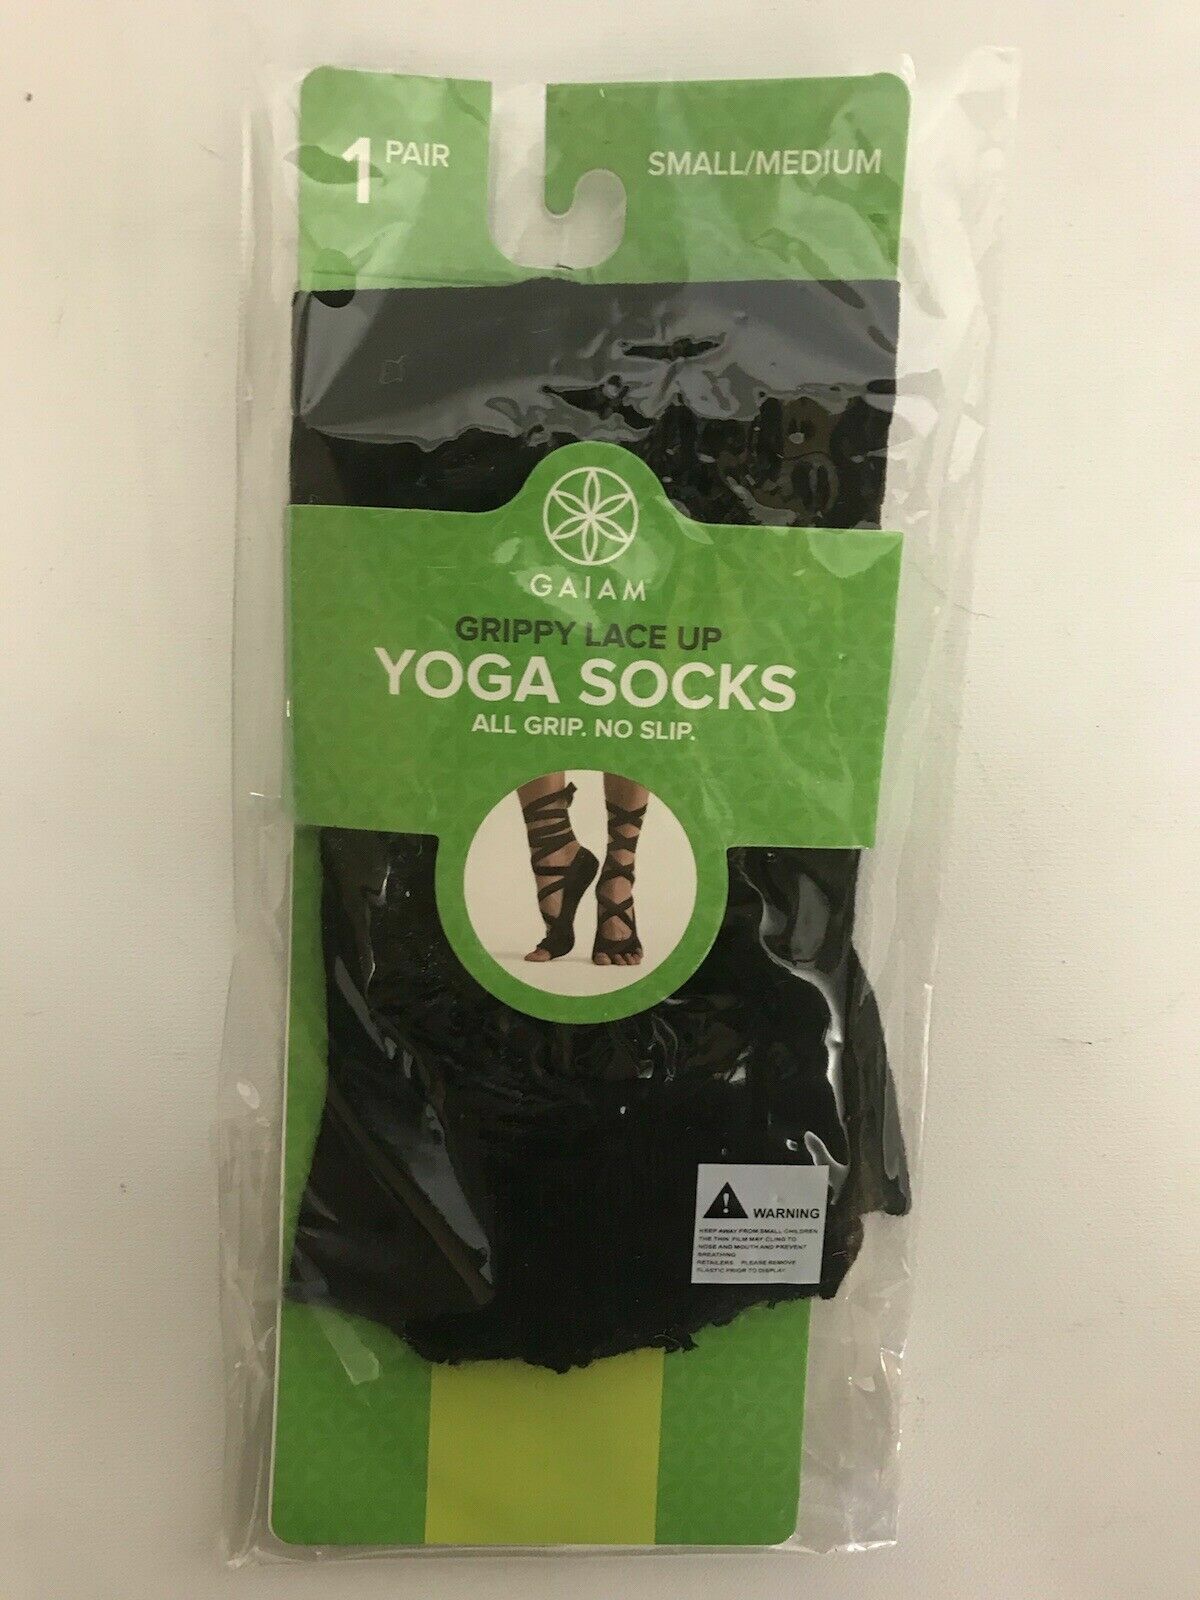 Gaiam Grippy Lace Up Yoga Socks- 1 Pair- Small/medium- New